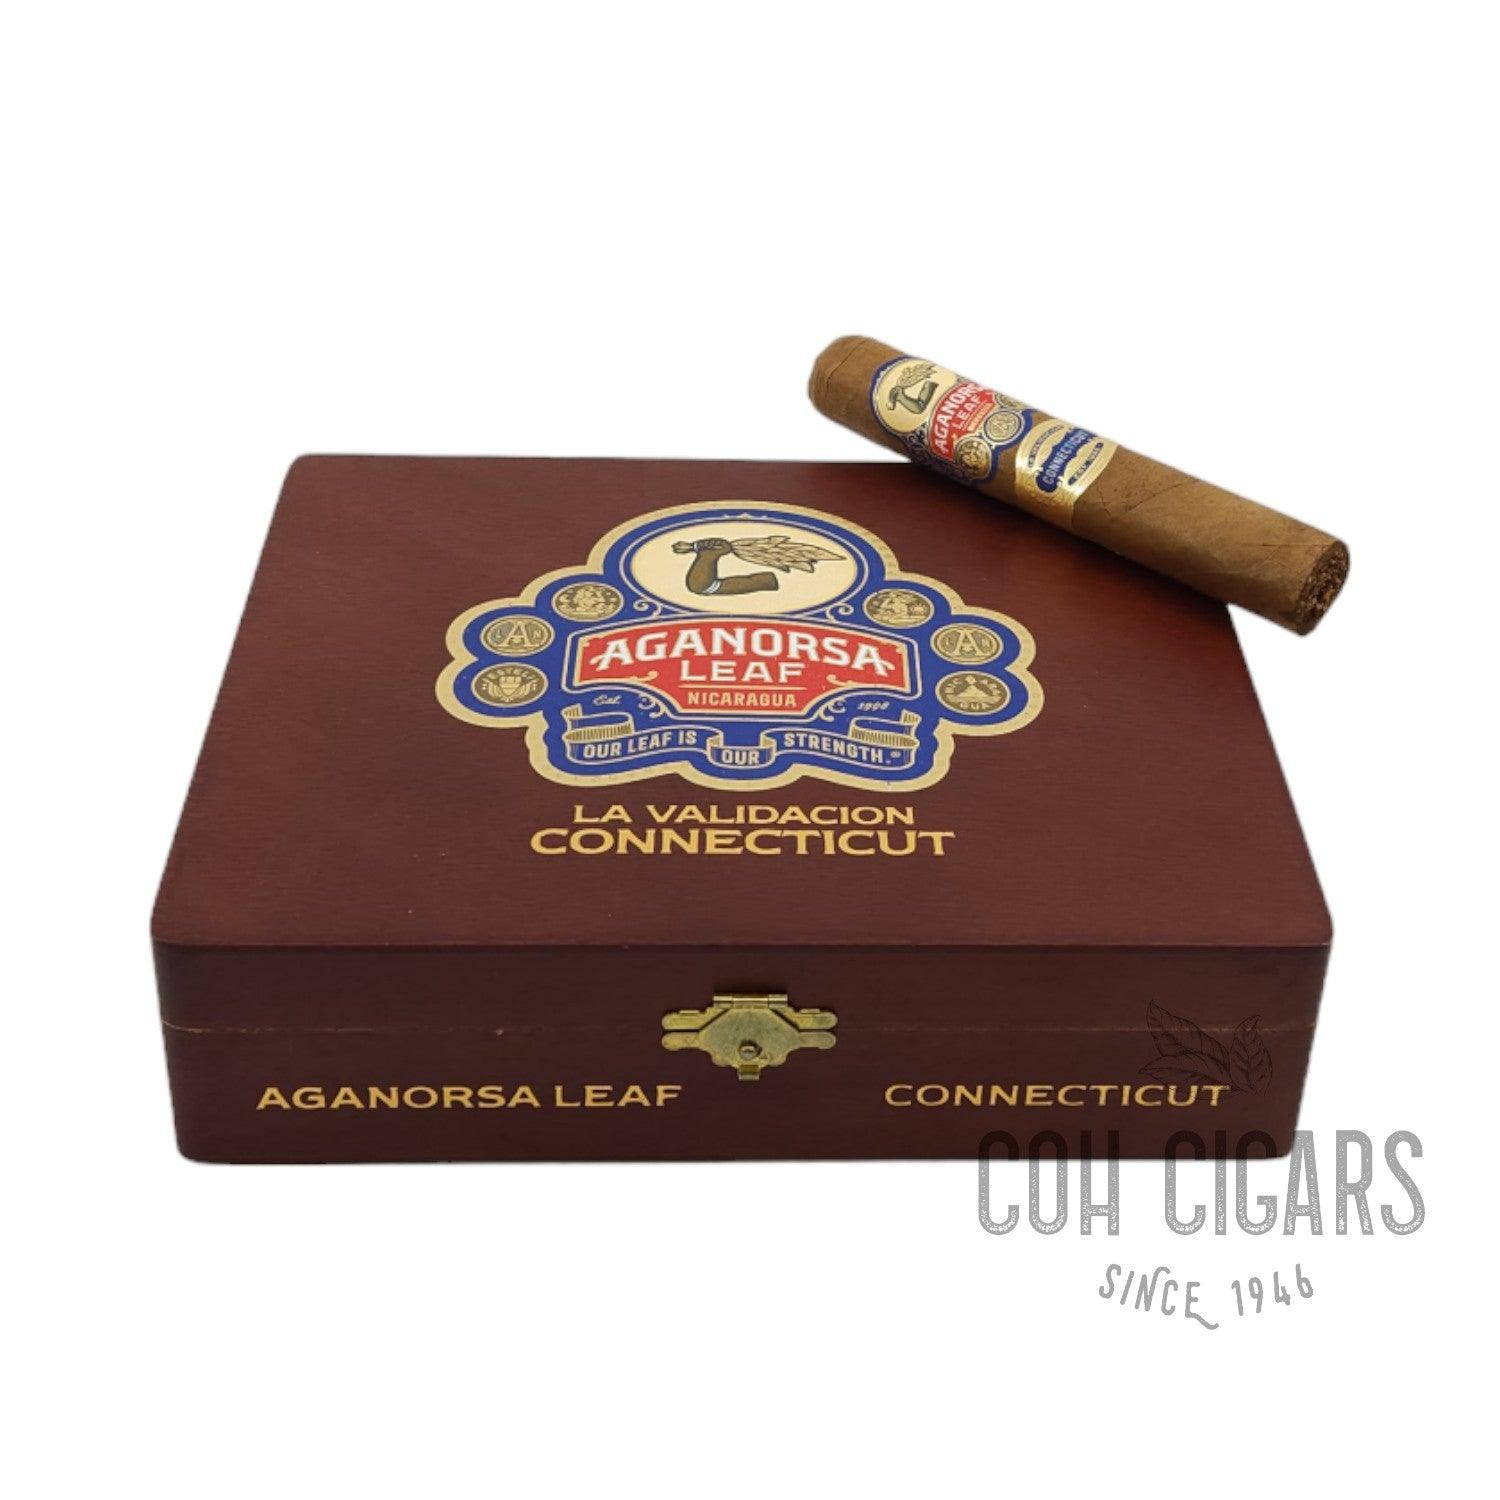 Aganorsa Leaf Cigar | La Validacion Connecticut Gran Robusto | Box 15 - HK CohCigars